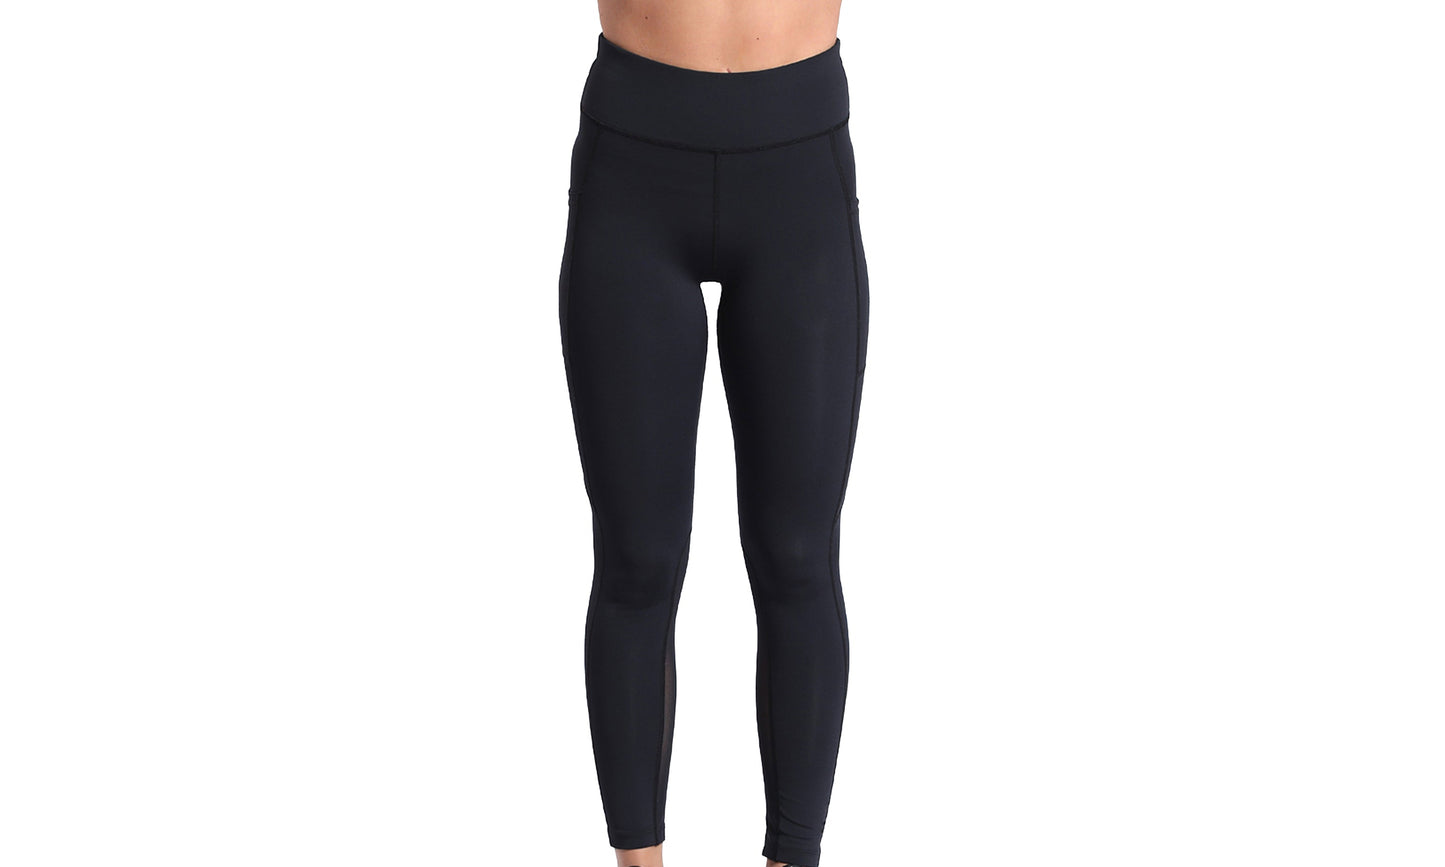 High Waist Yoga Pants Tummy Control Workout Pants for Women Leggings